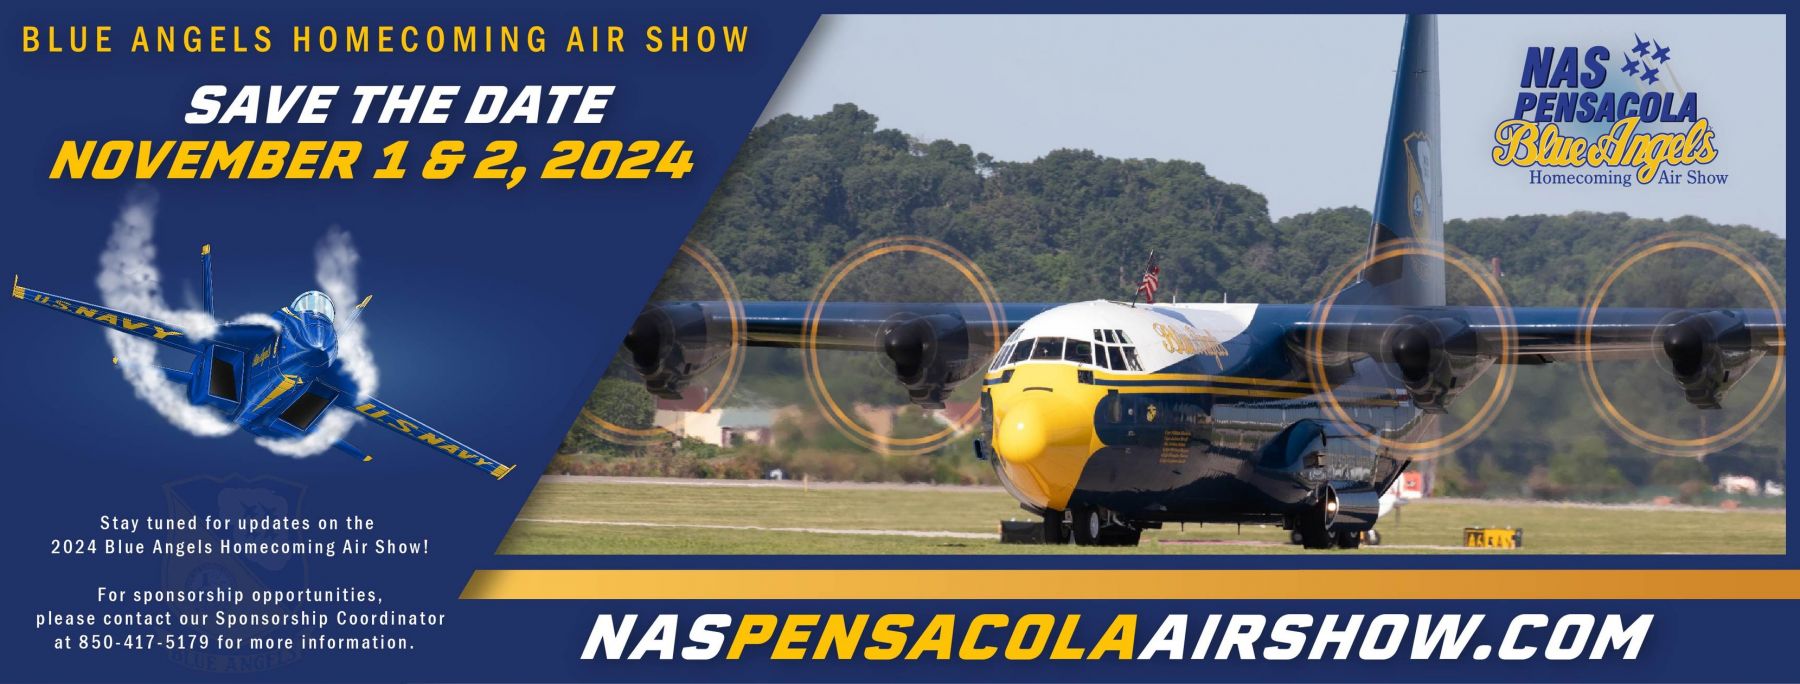 NAS Pensacola airshow 1 2 novembre 2024 Airshow Display